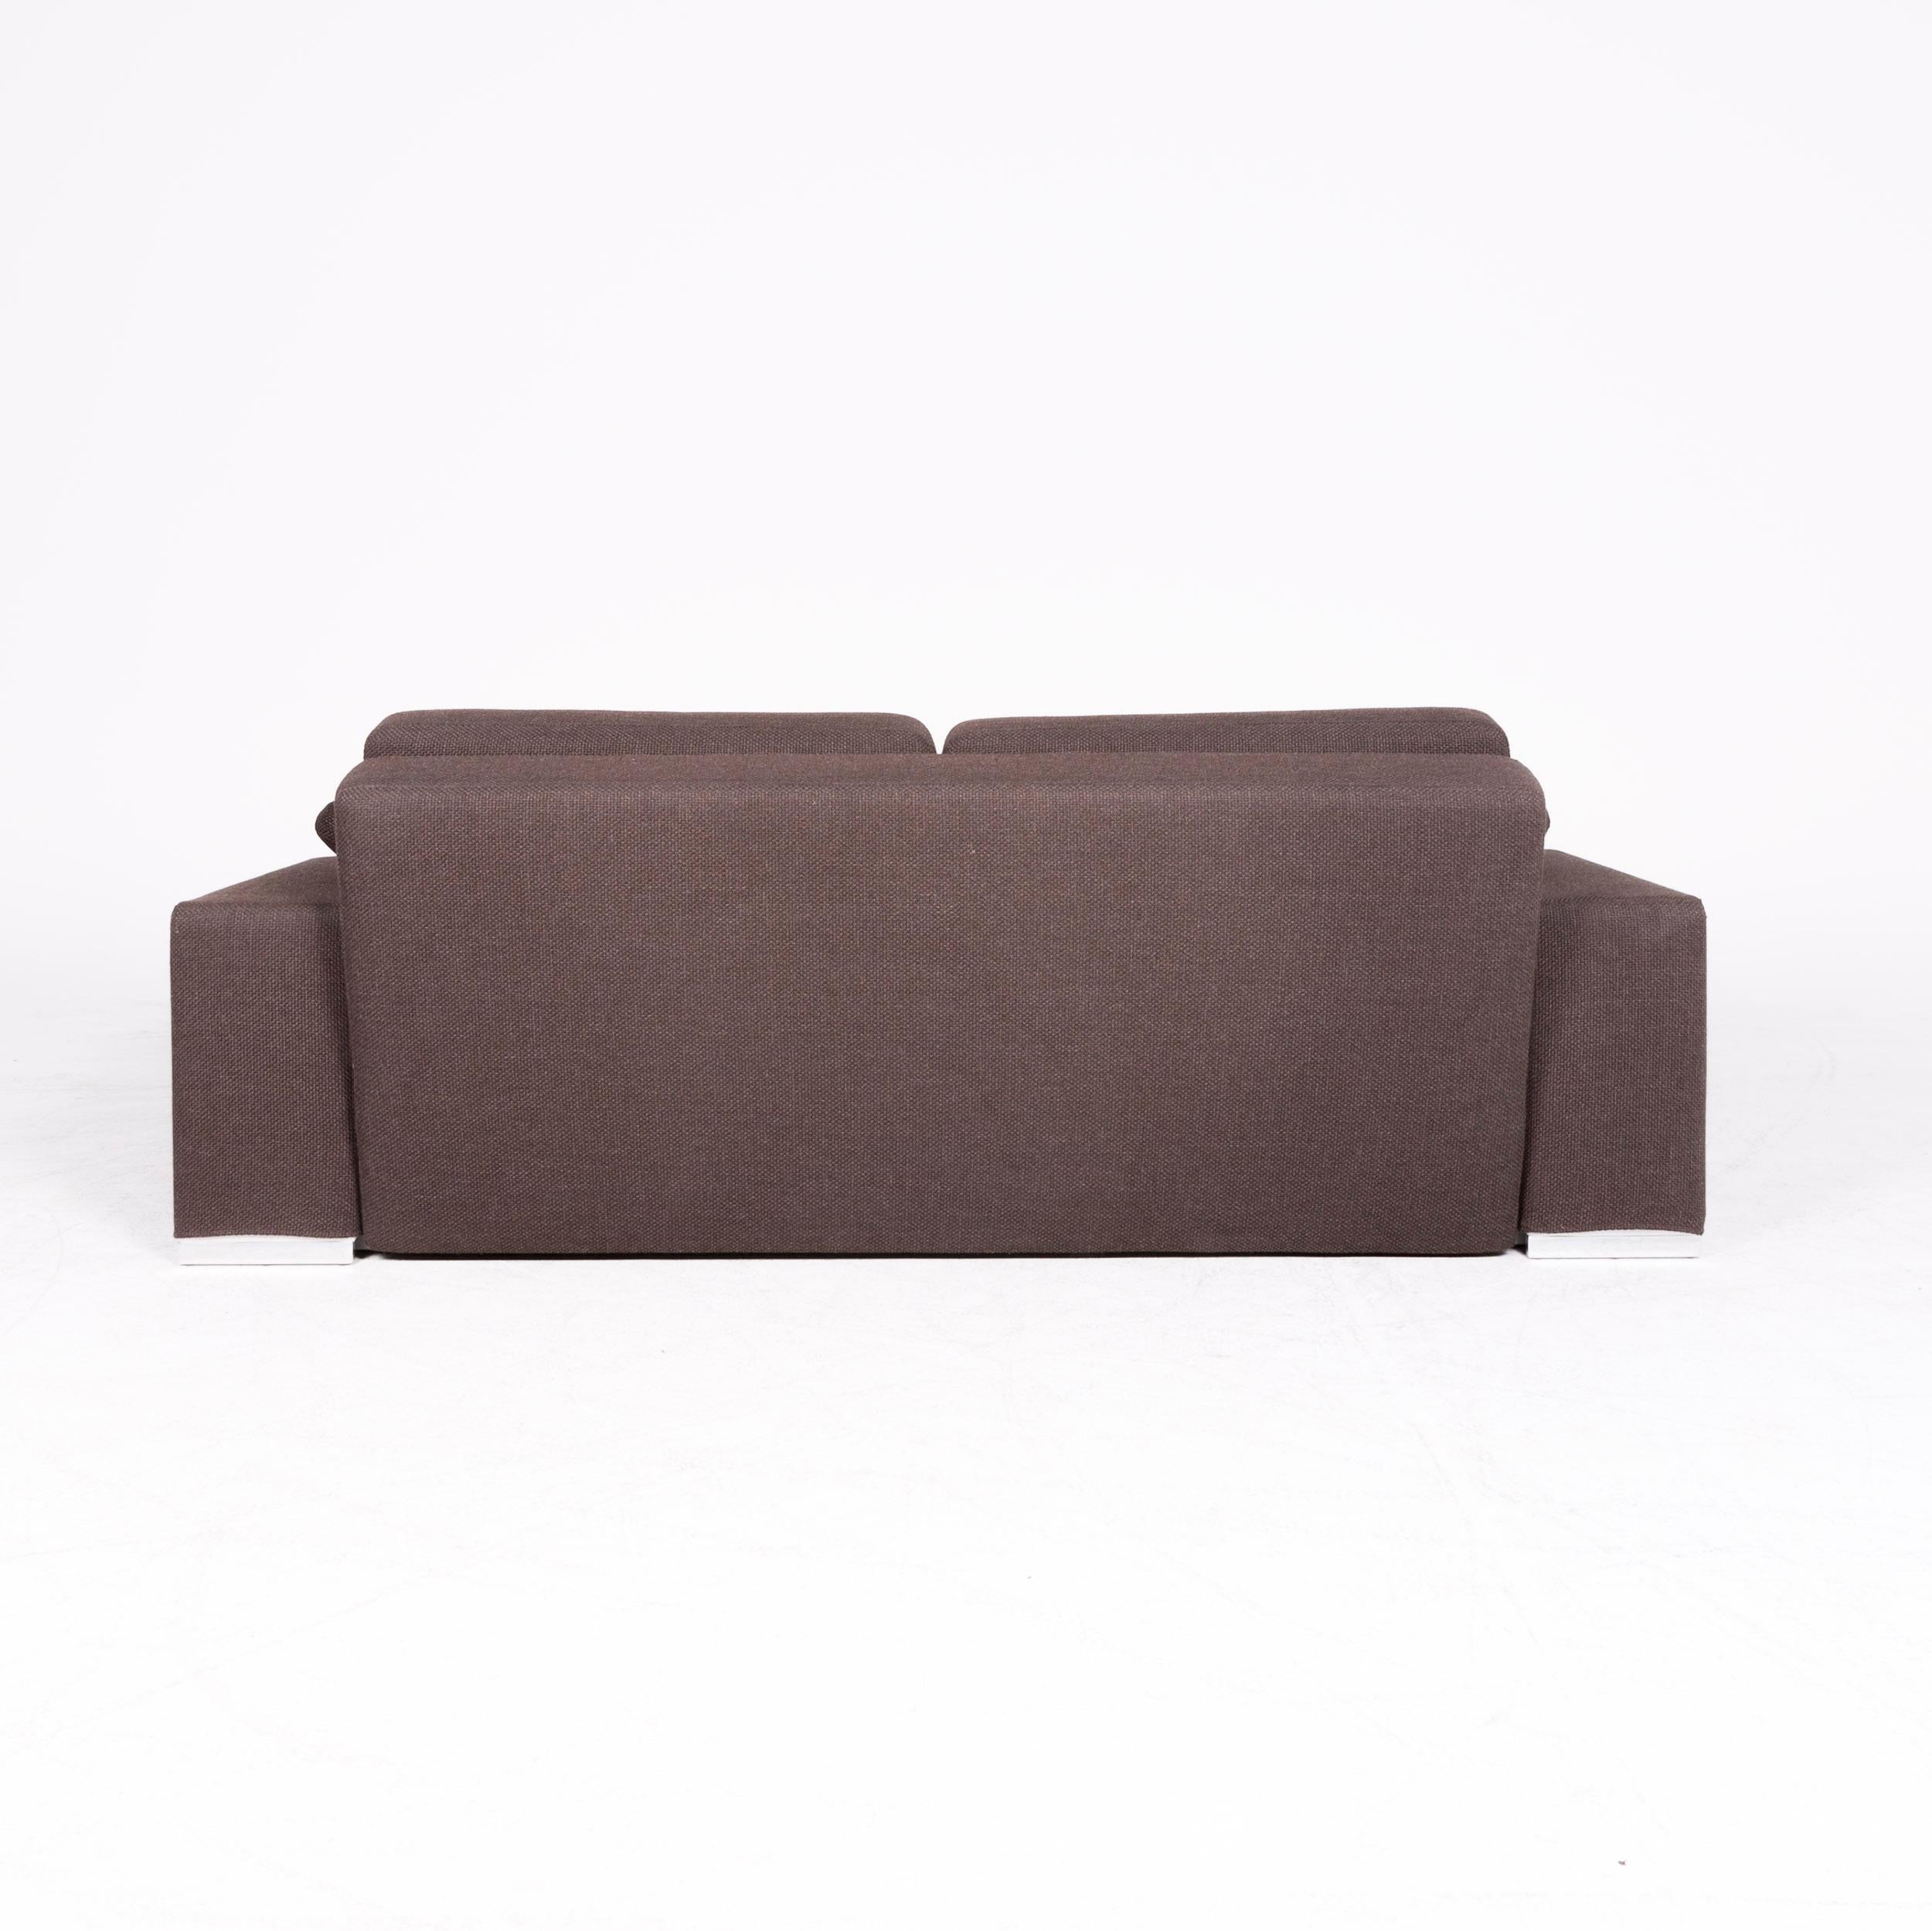 Brühl & Sippold Designer Fabric Sofa Brown Two-Seat Sofa Function Sofa Bed 5